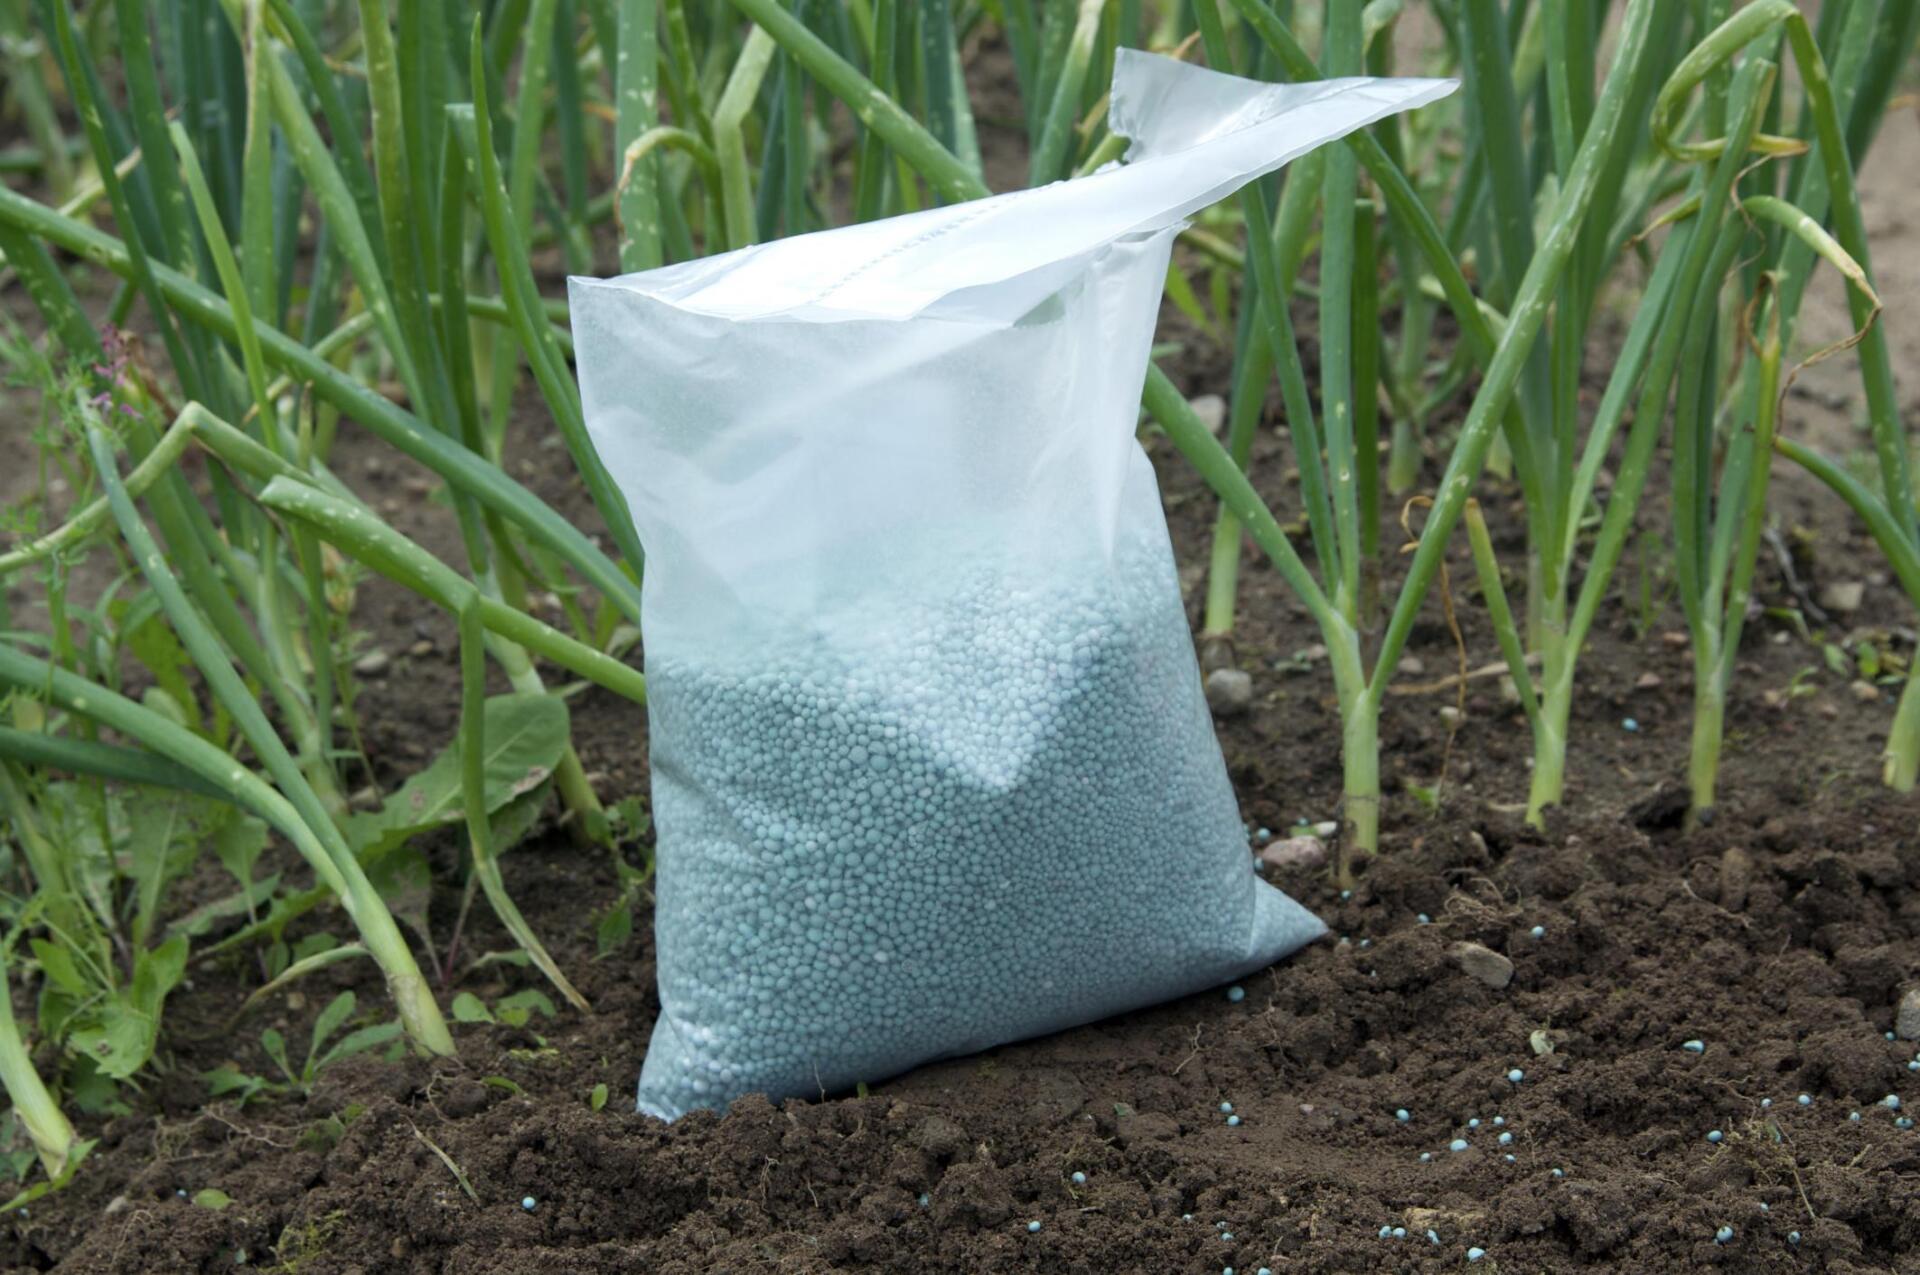 a sack of fertilizer